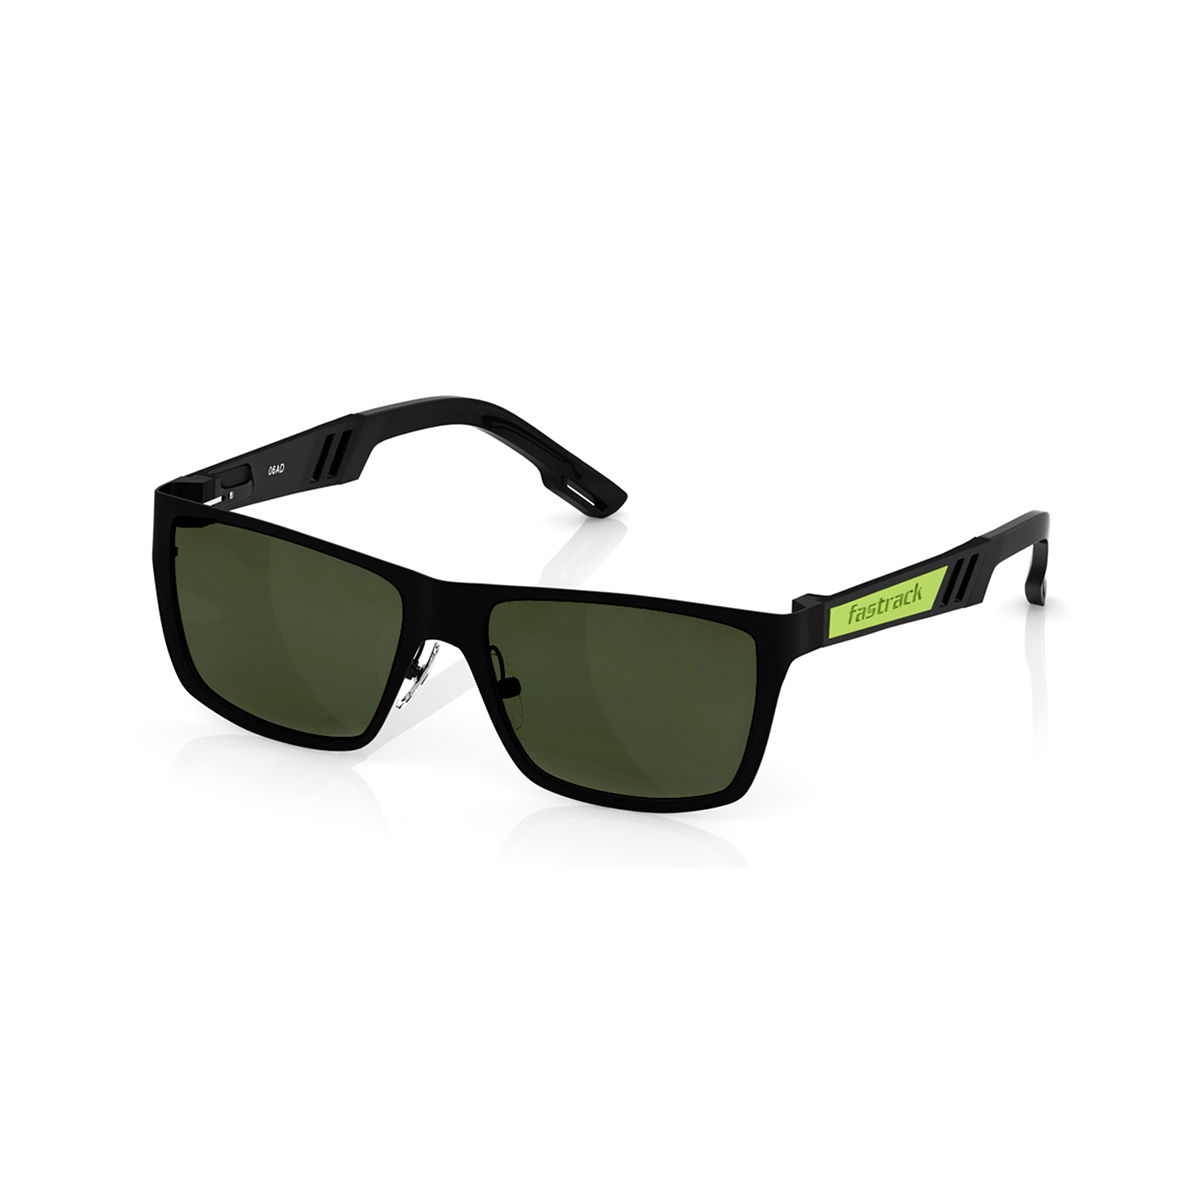 Navigator Rimmed Sunglasses Fastrack - M253BU2V at best price | Titan Eye+